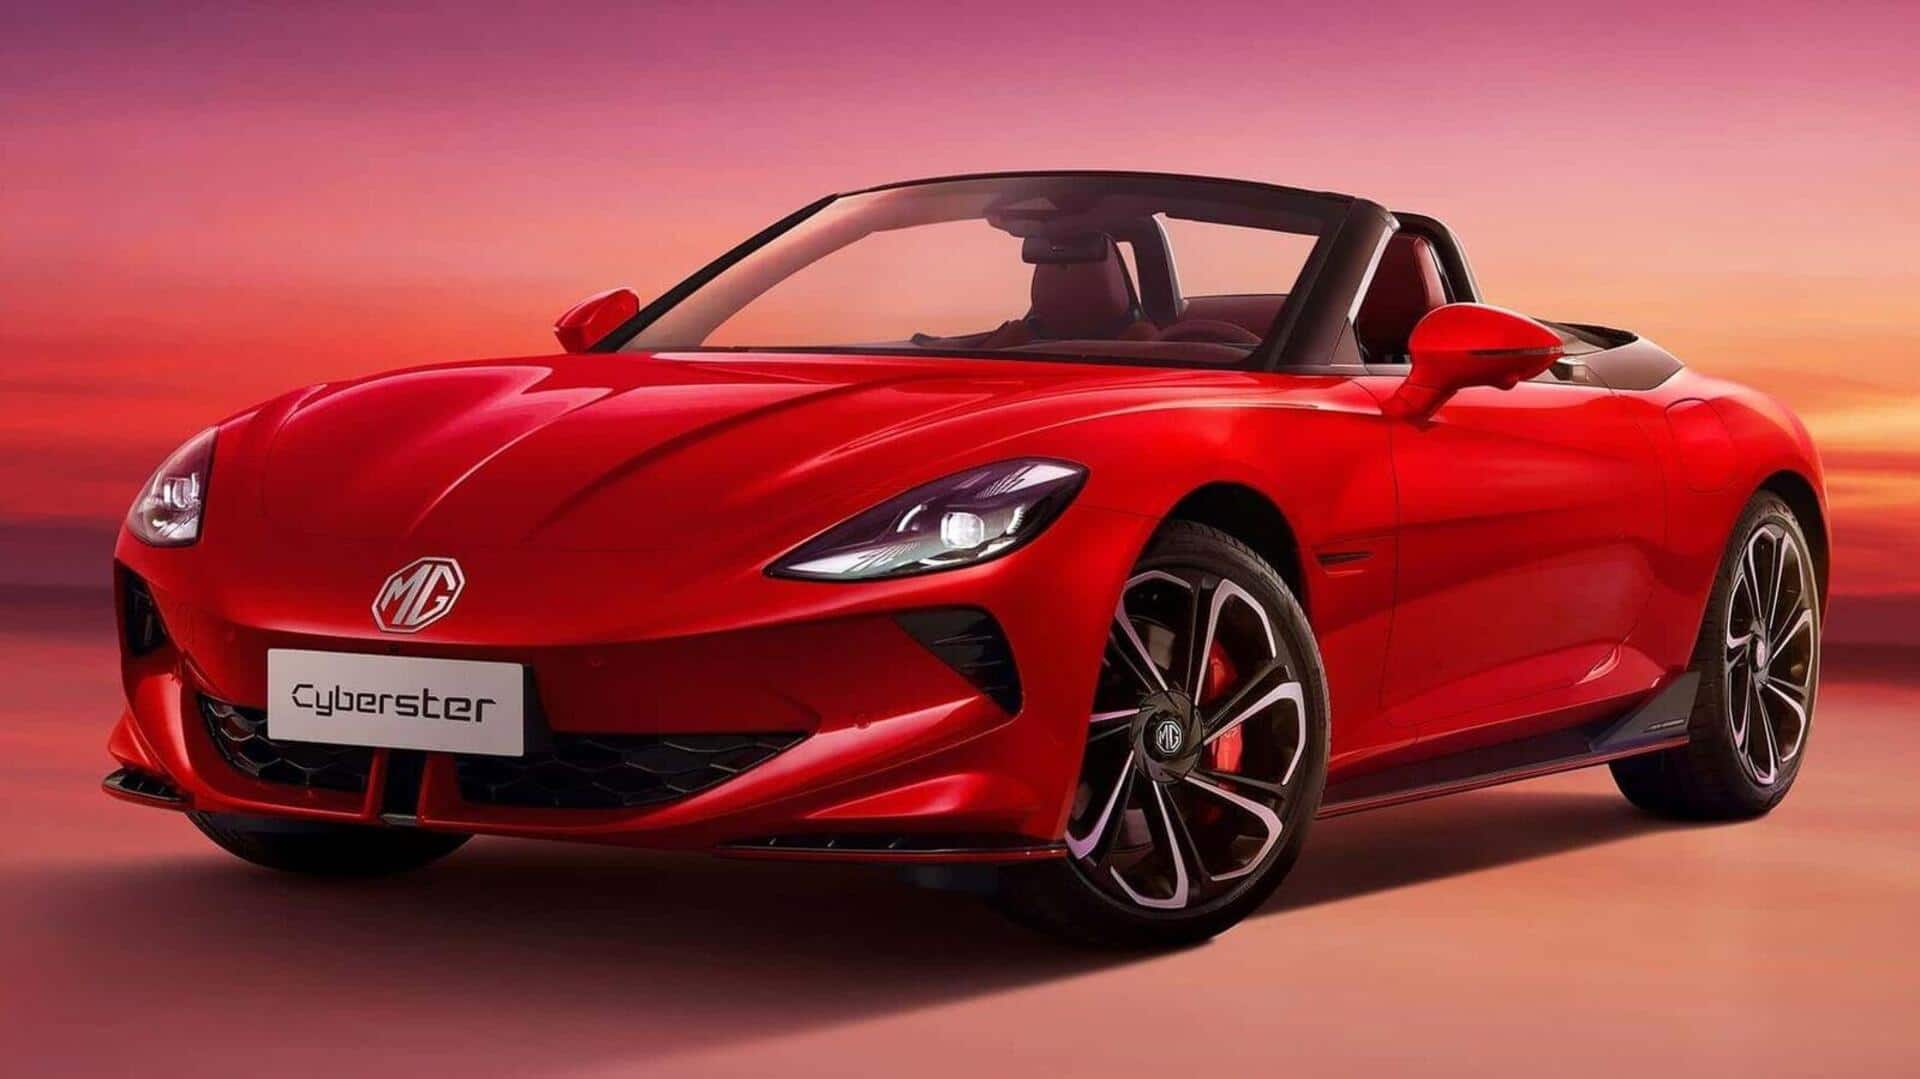 MG Motor to showcase Cyberster electric sportscar in India tomorrow